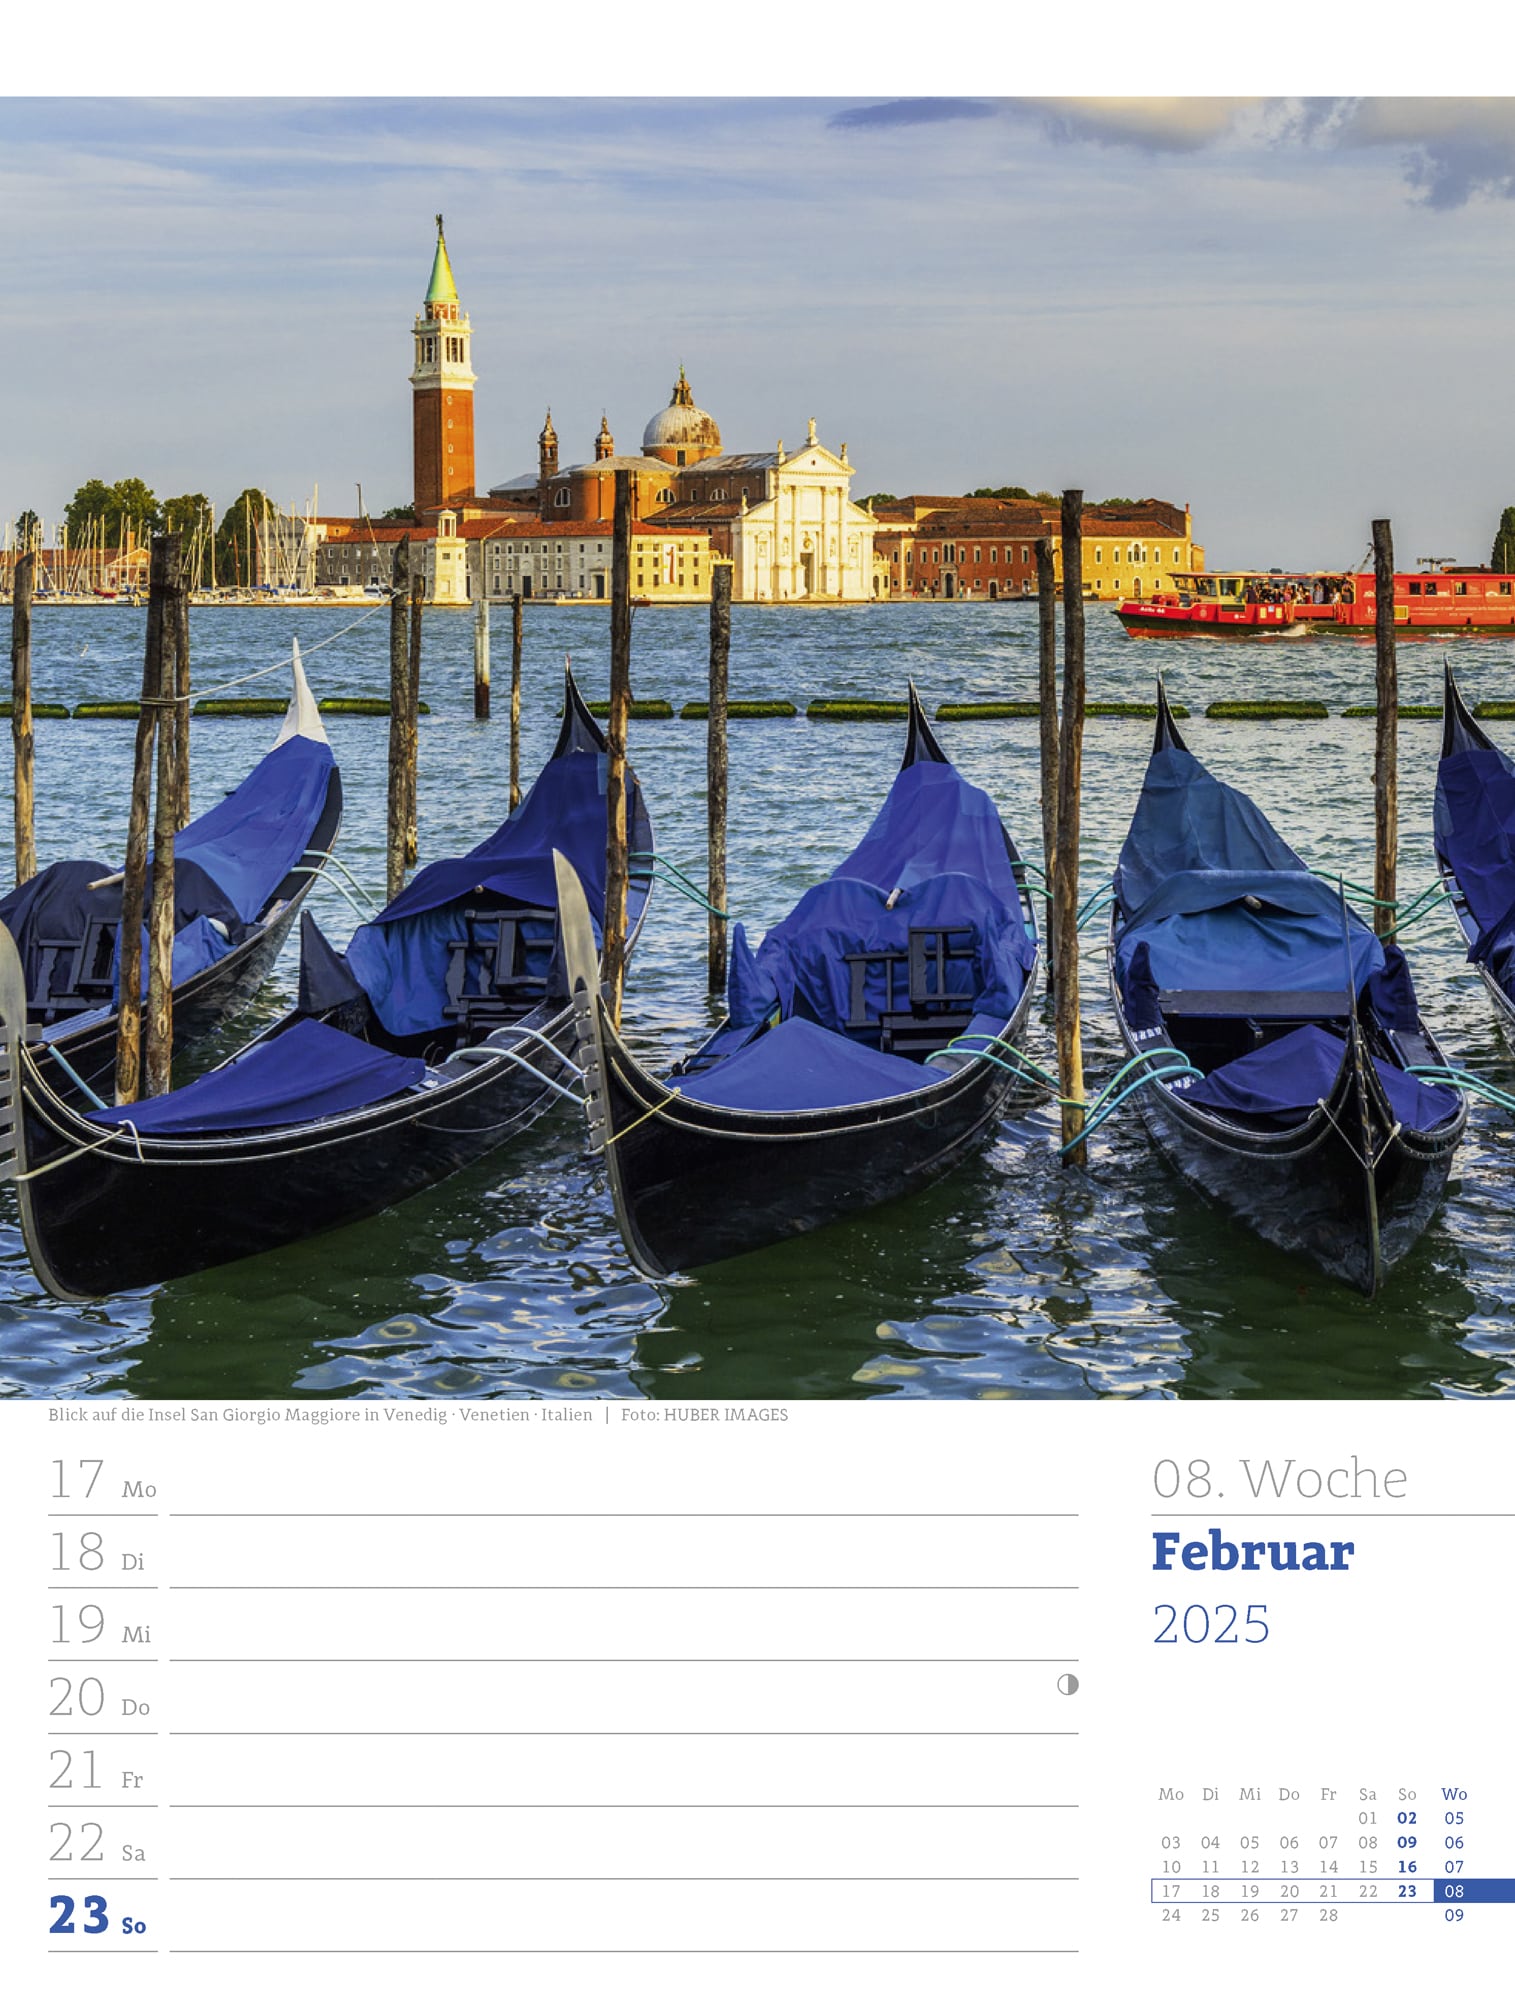 Ackermann Calendar Travel the World 2025 - Weekly Planner - Inside View 11